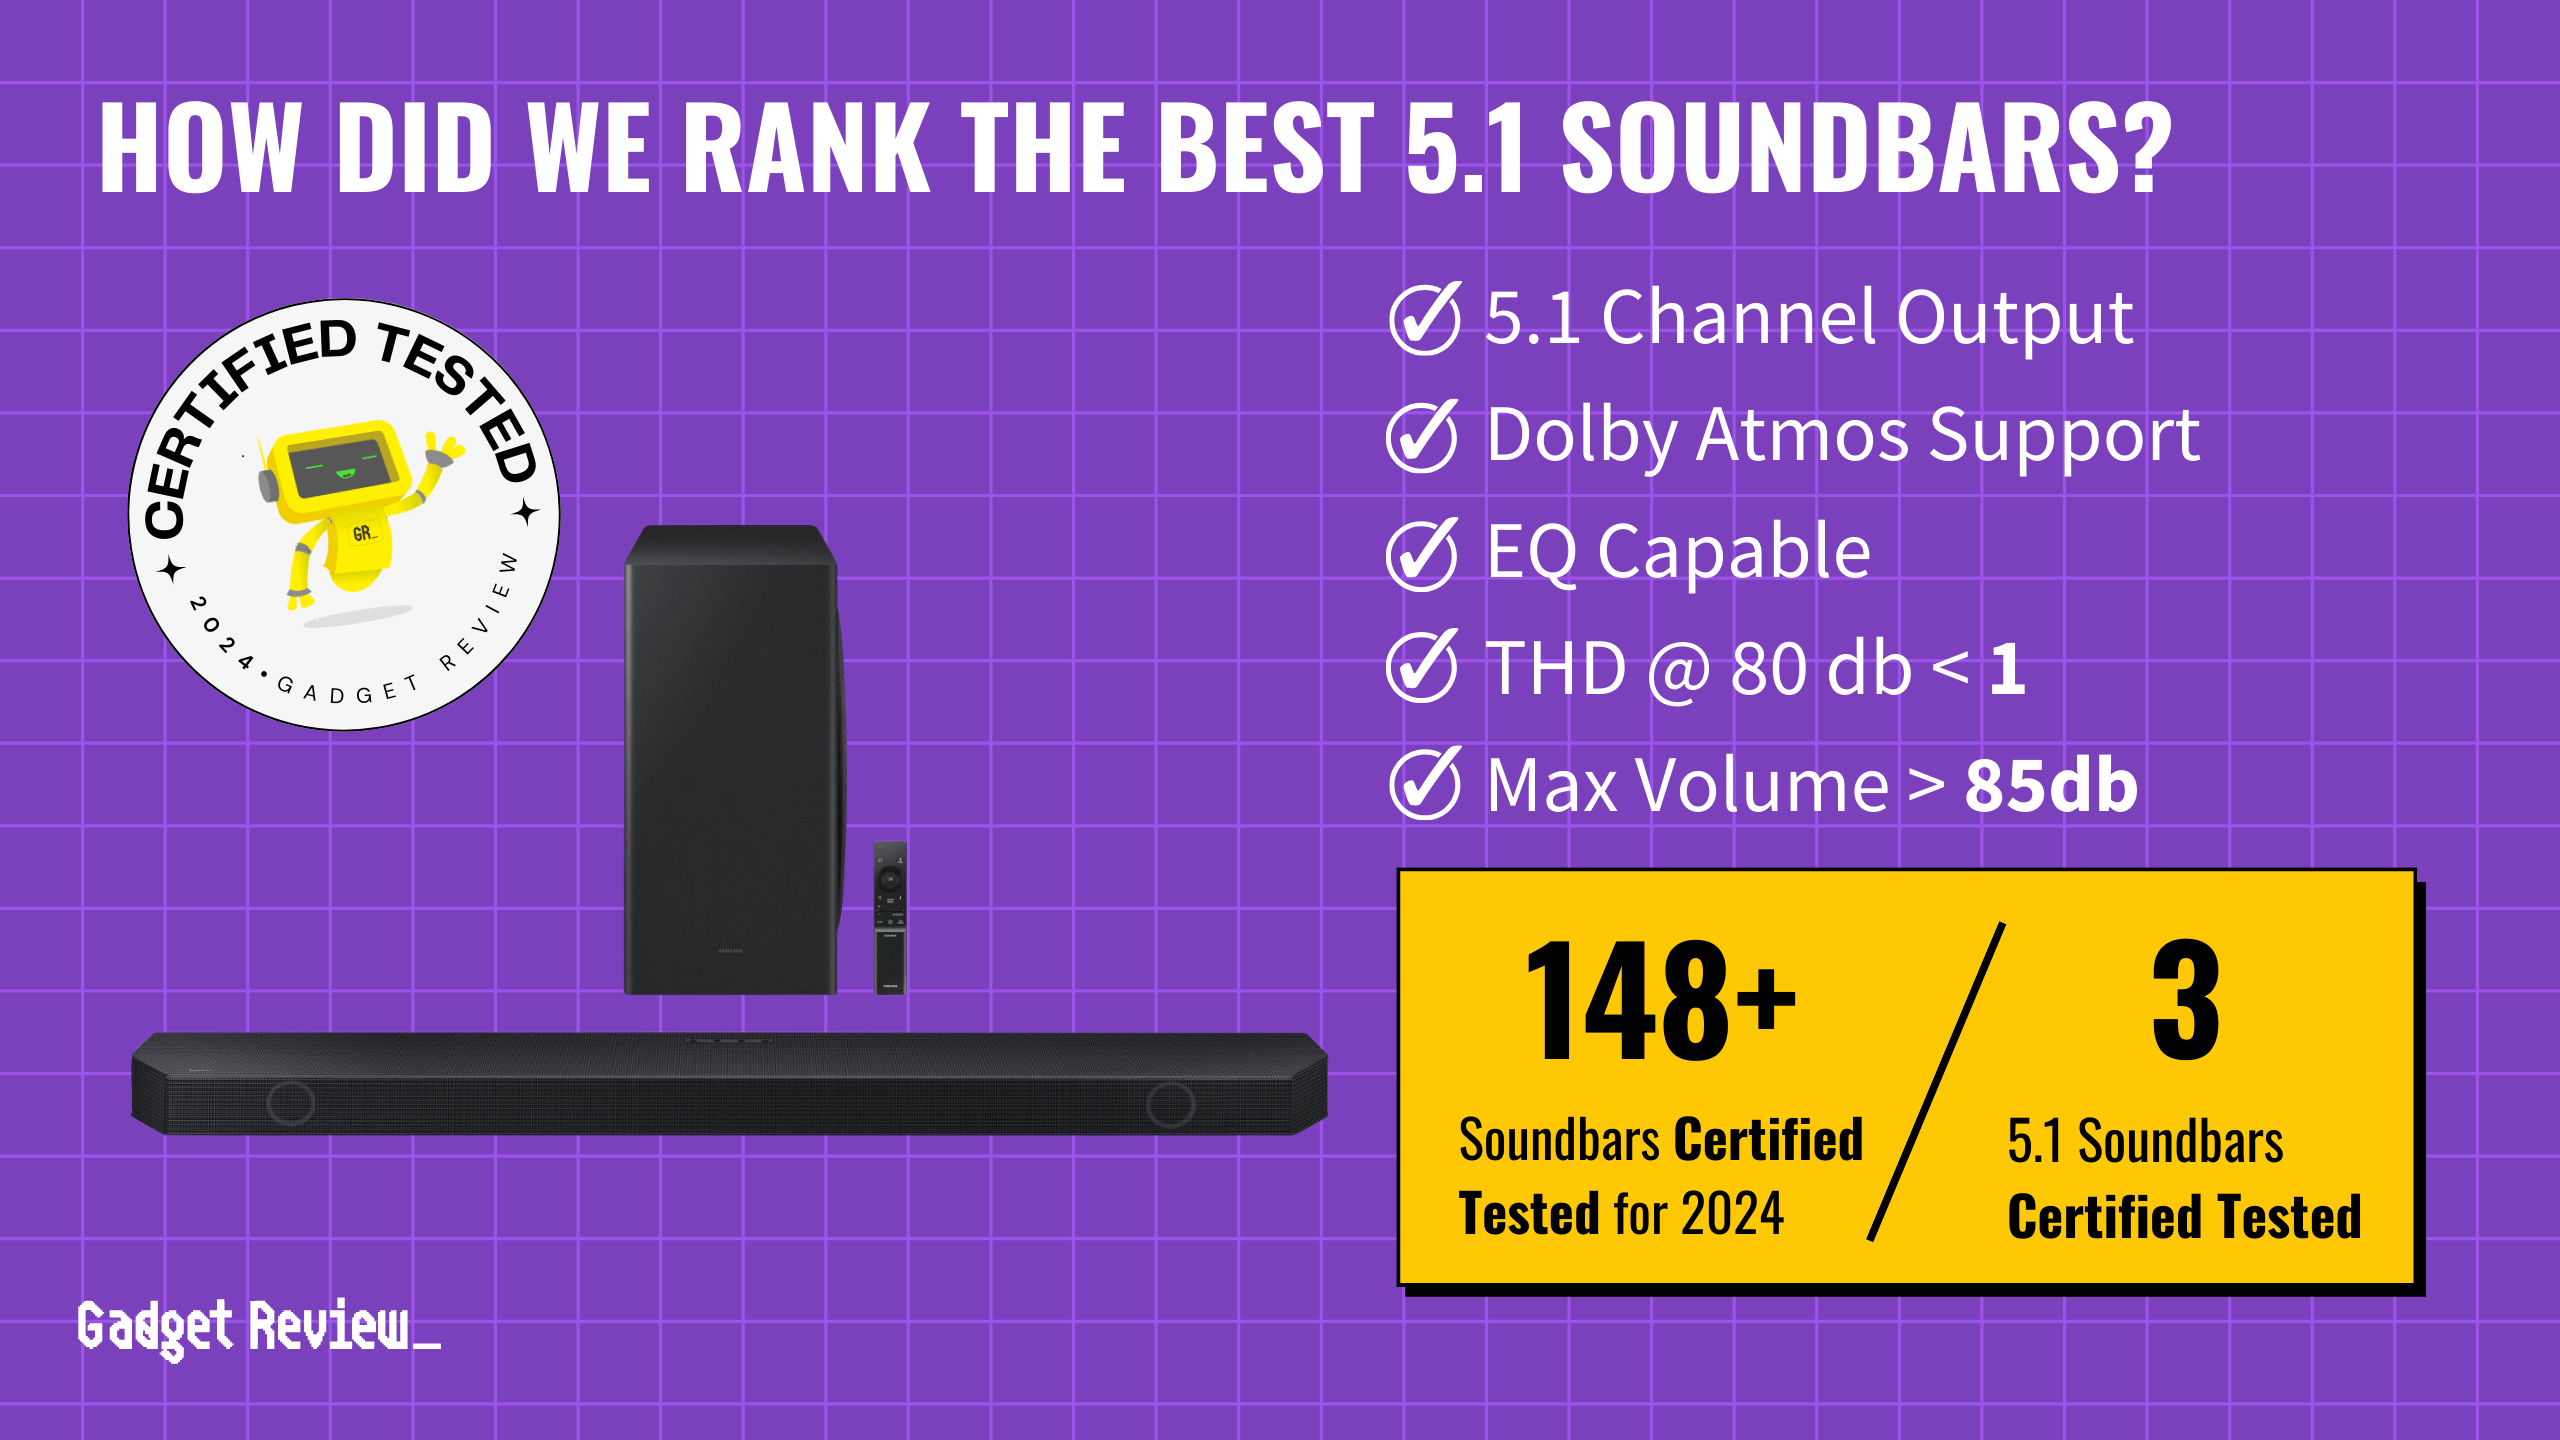 How We Ranked The 3 Best 5.1 Soundbars